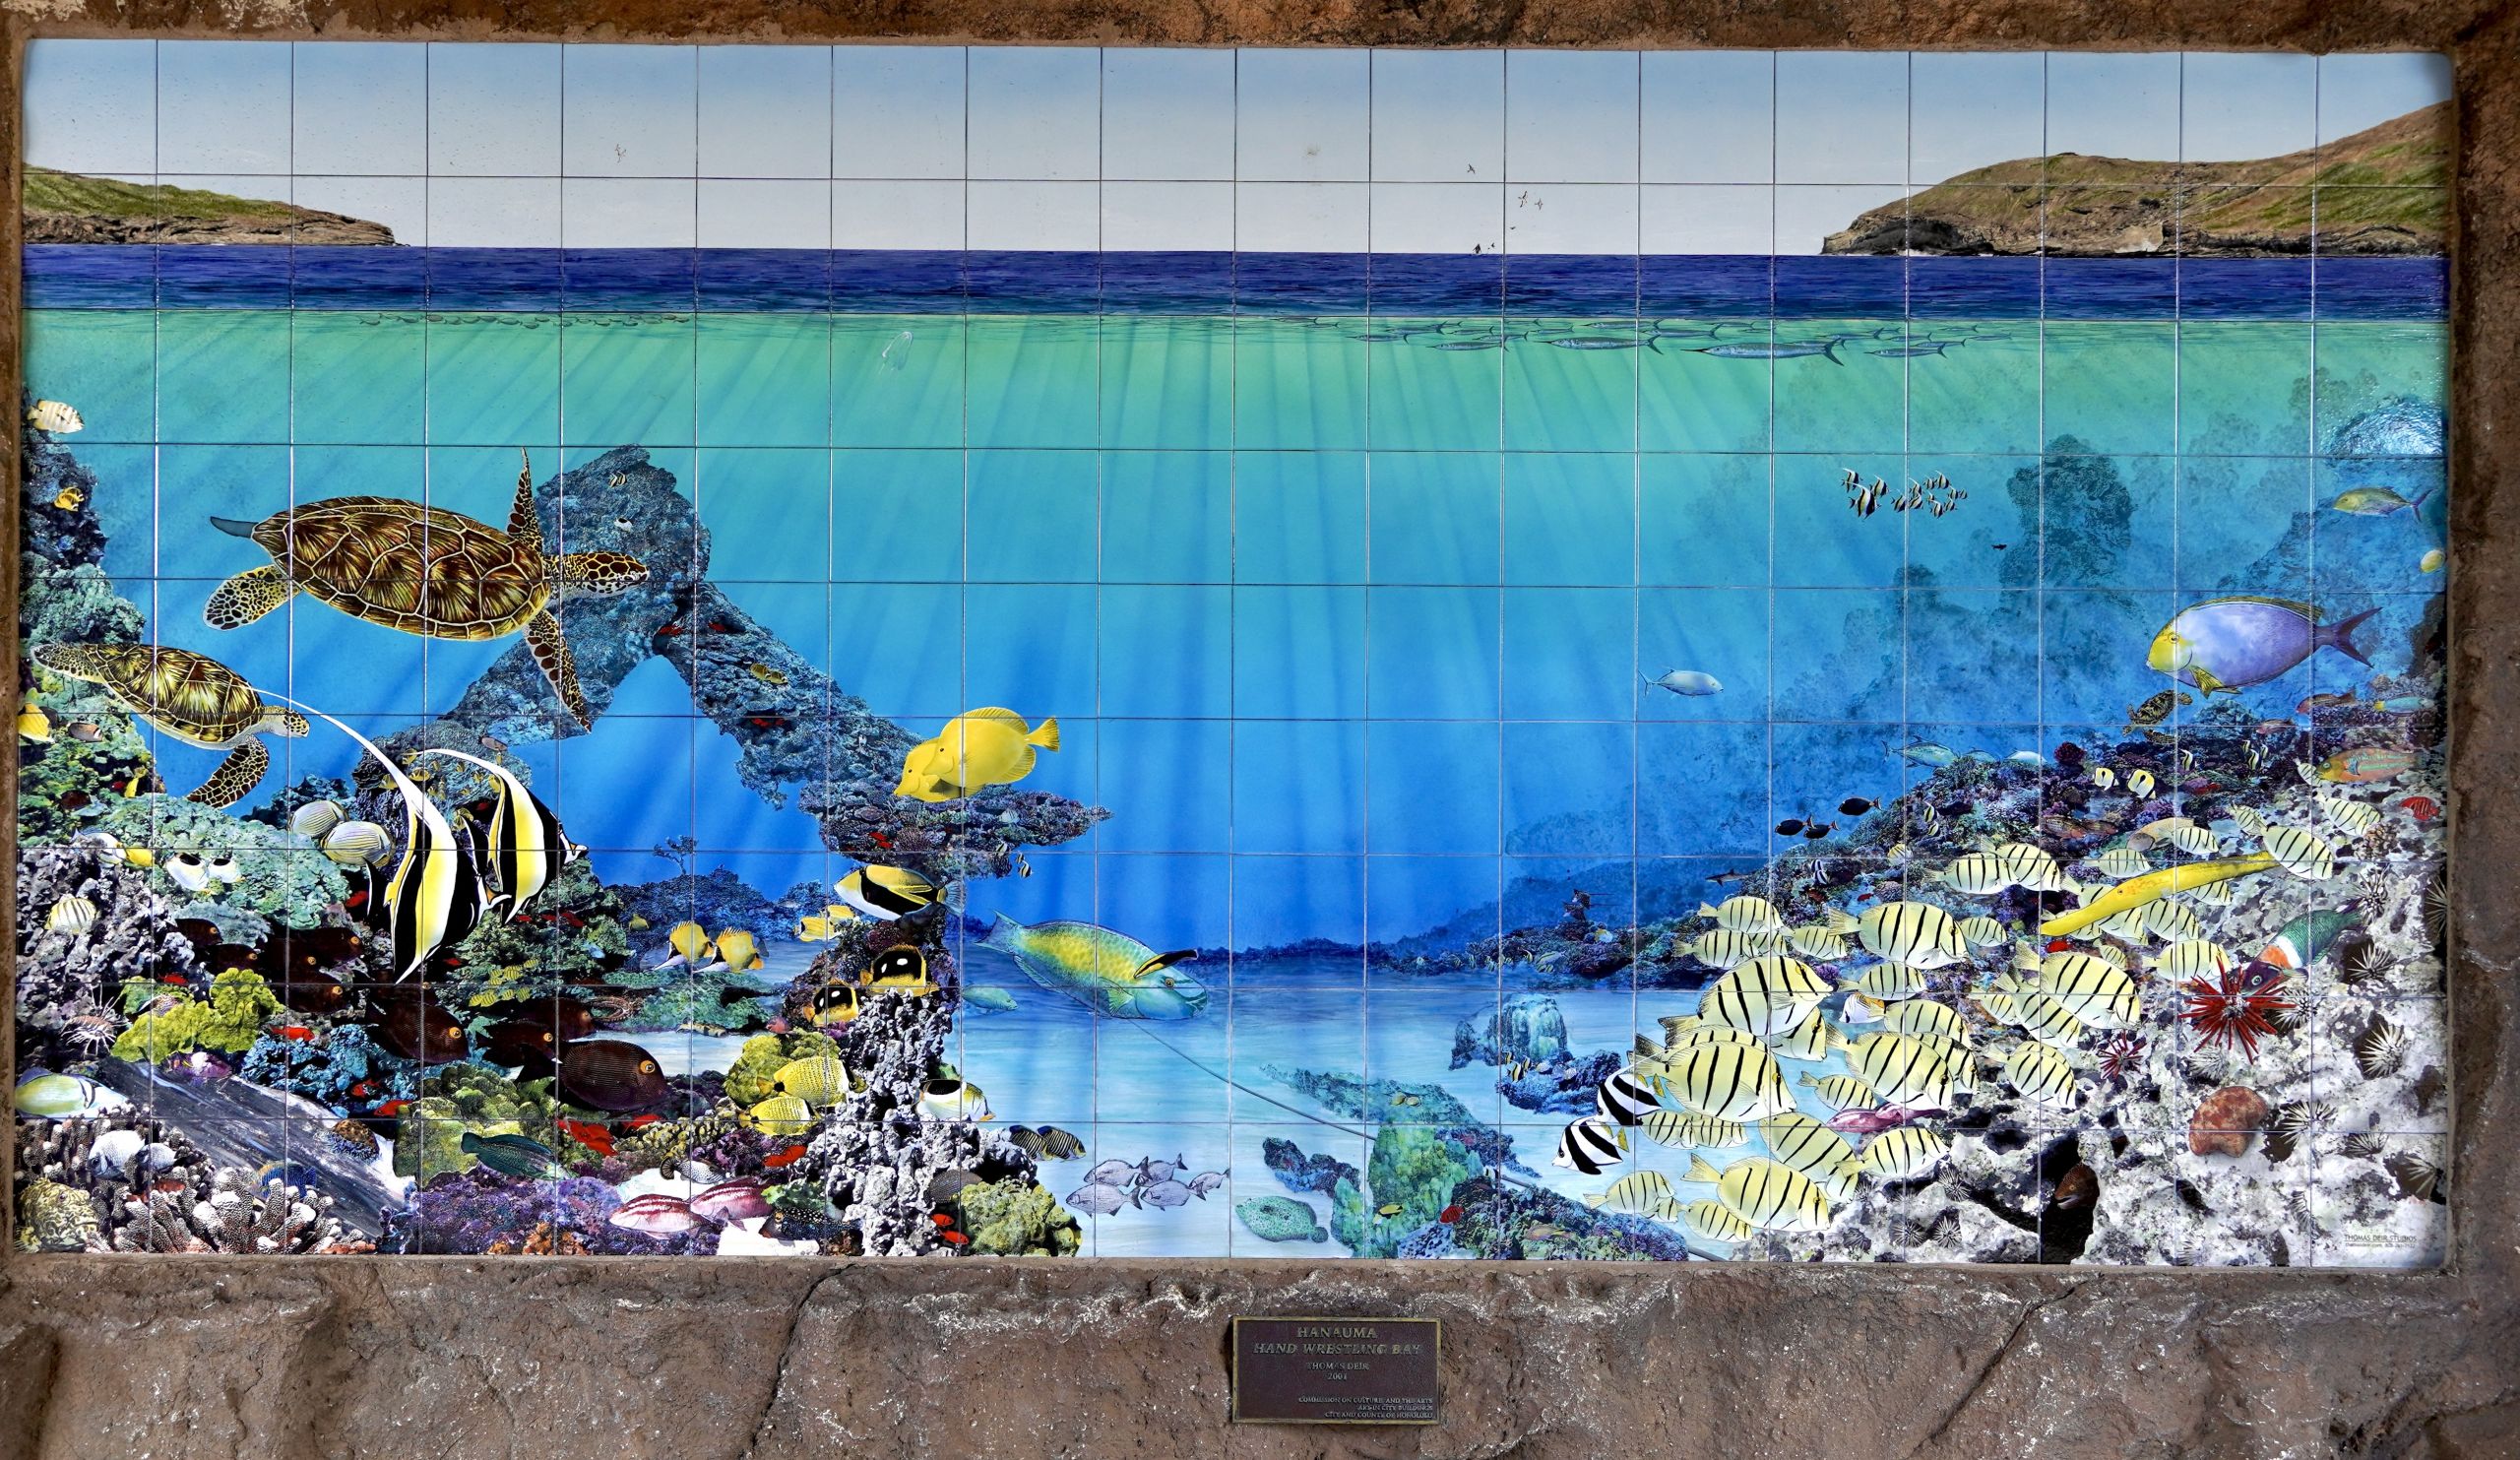 A colorful mural of the reef at Hanauma Bay